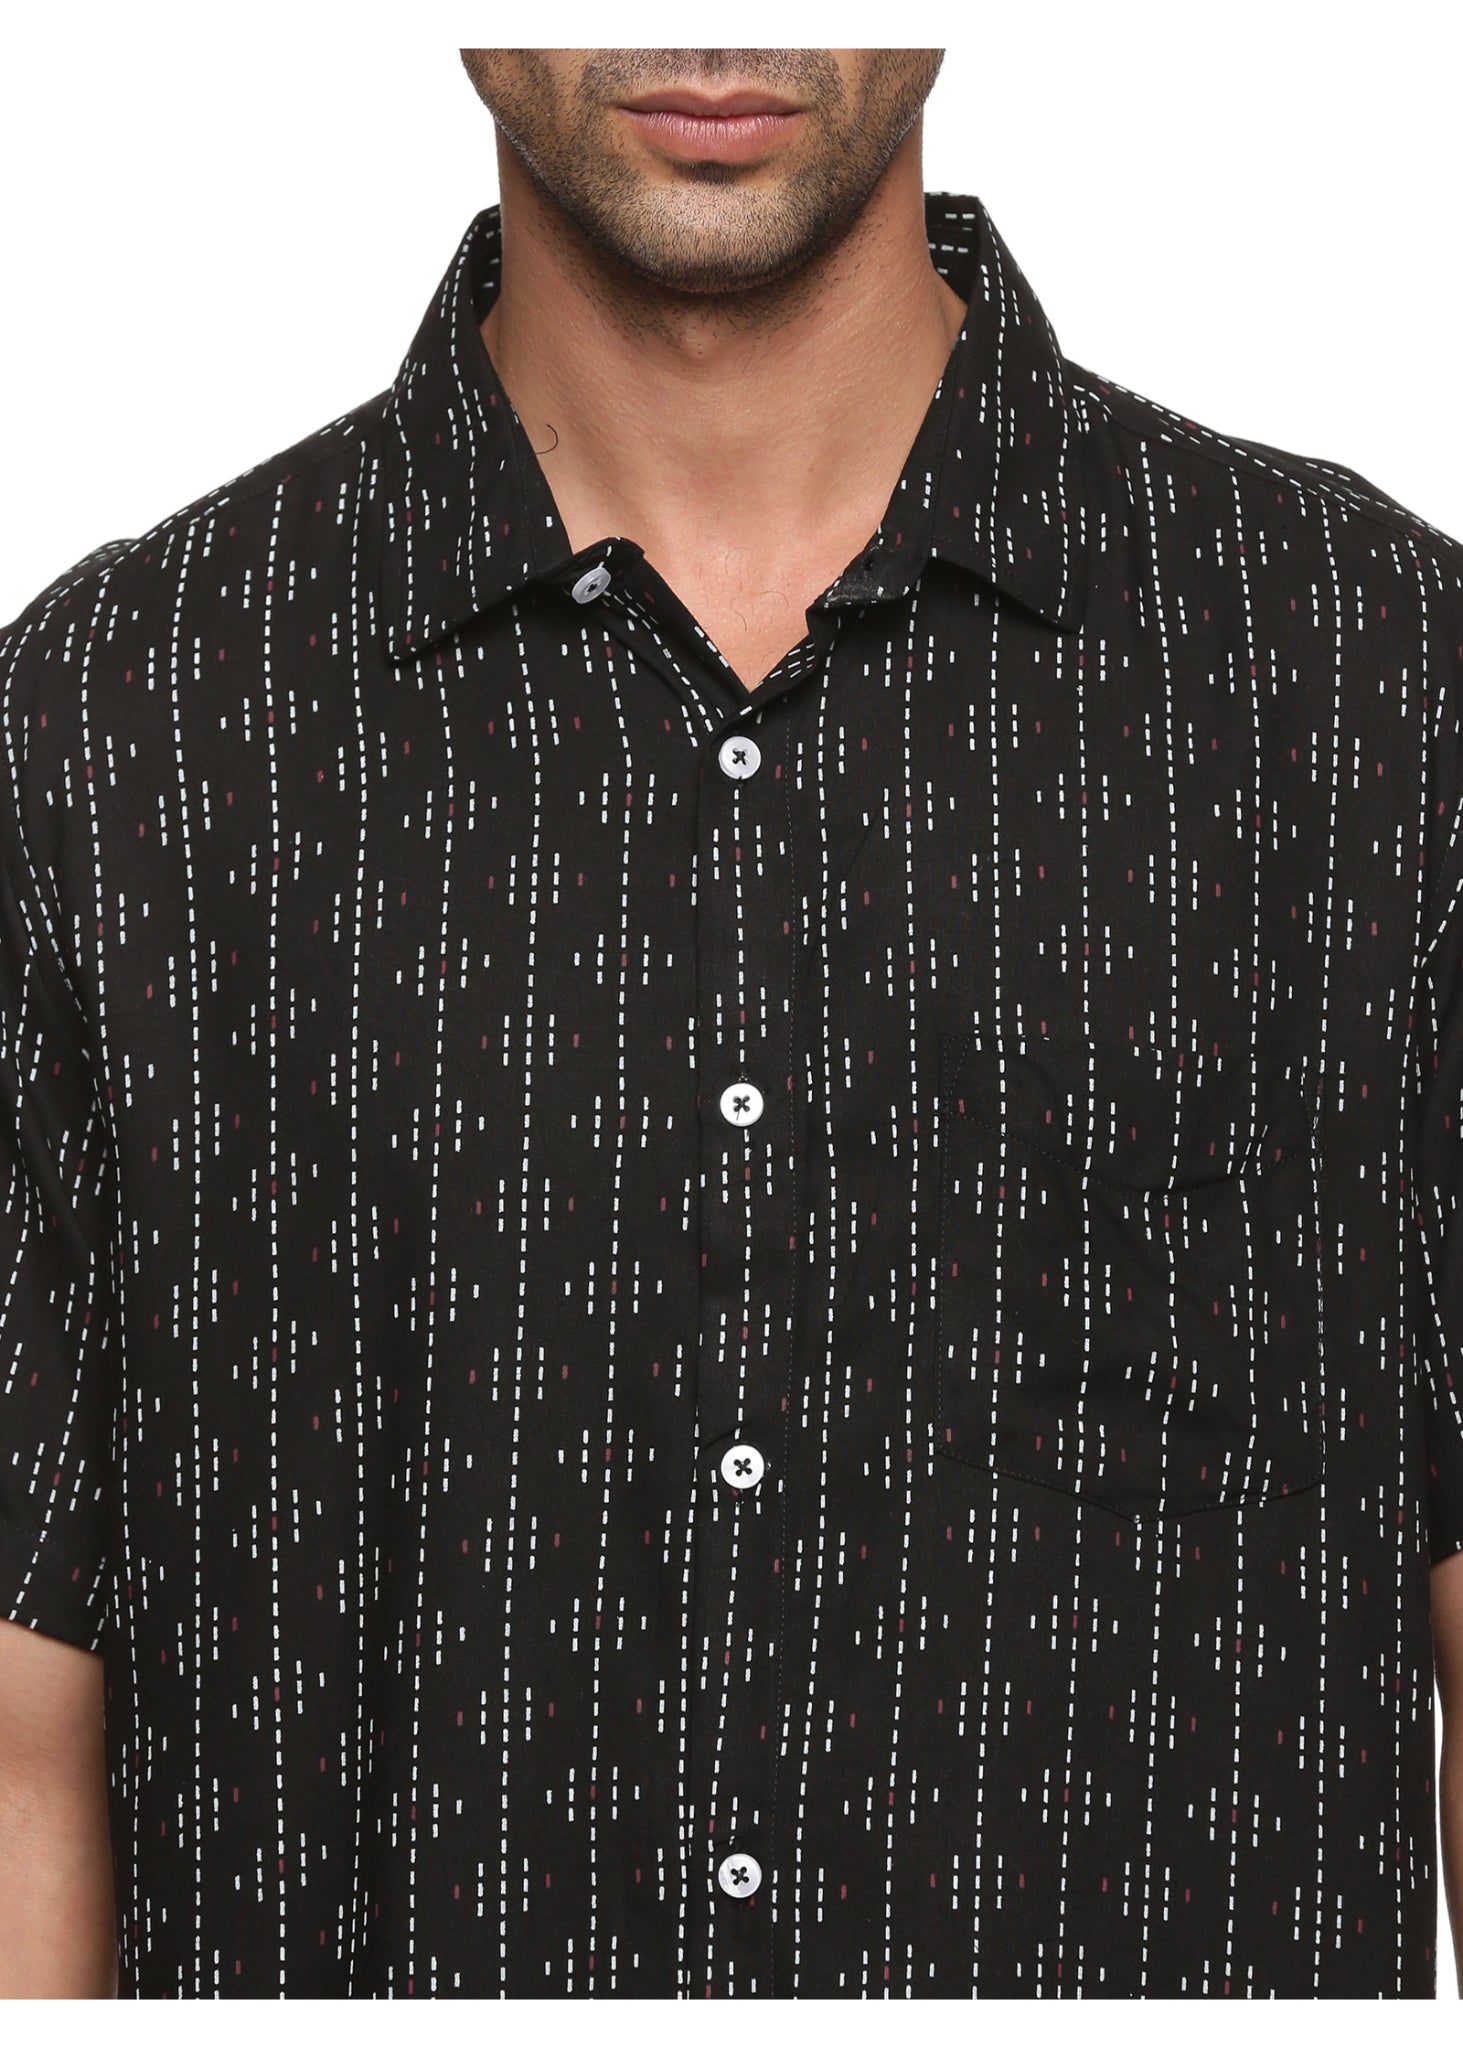 Signal Black Printed Shirt - Tusok